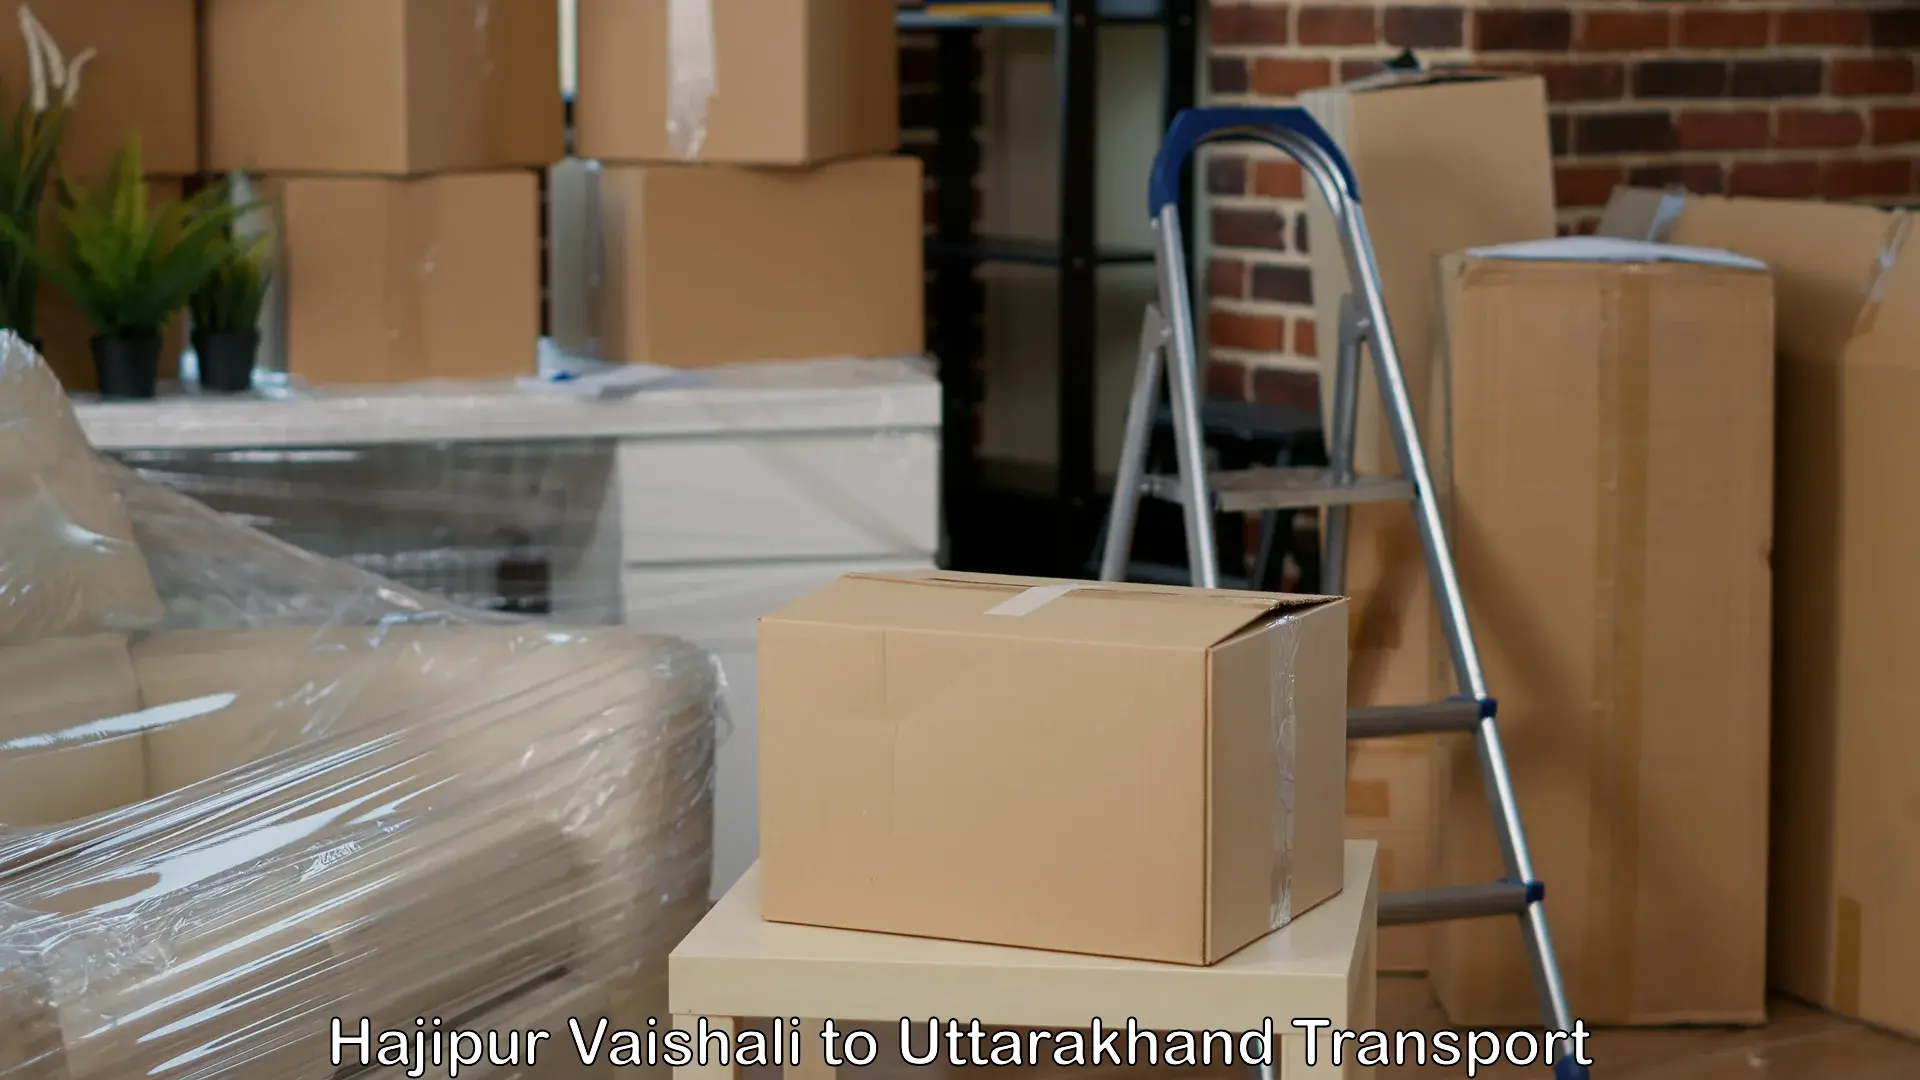 Truck transport companies in India Hajipur Vaishali to Pithoragarh